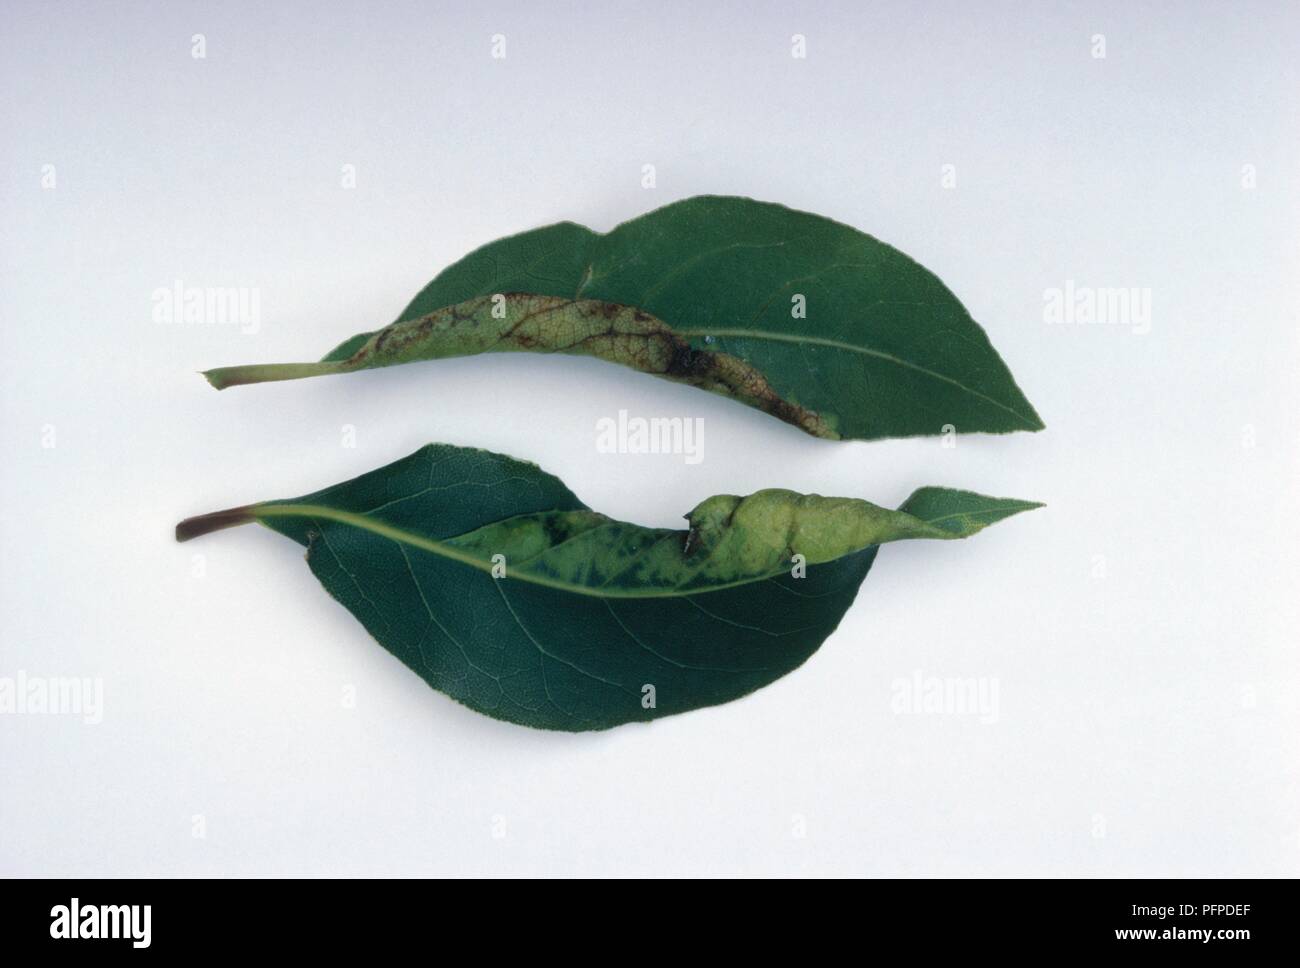 Laurus nobilis (Bay leaf) leaves damaged by psyllids Stock Photo